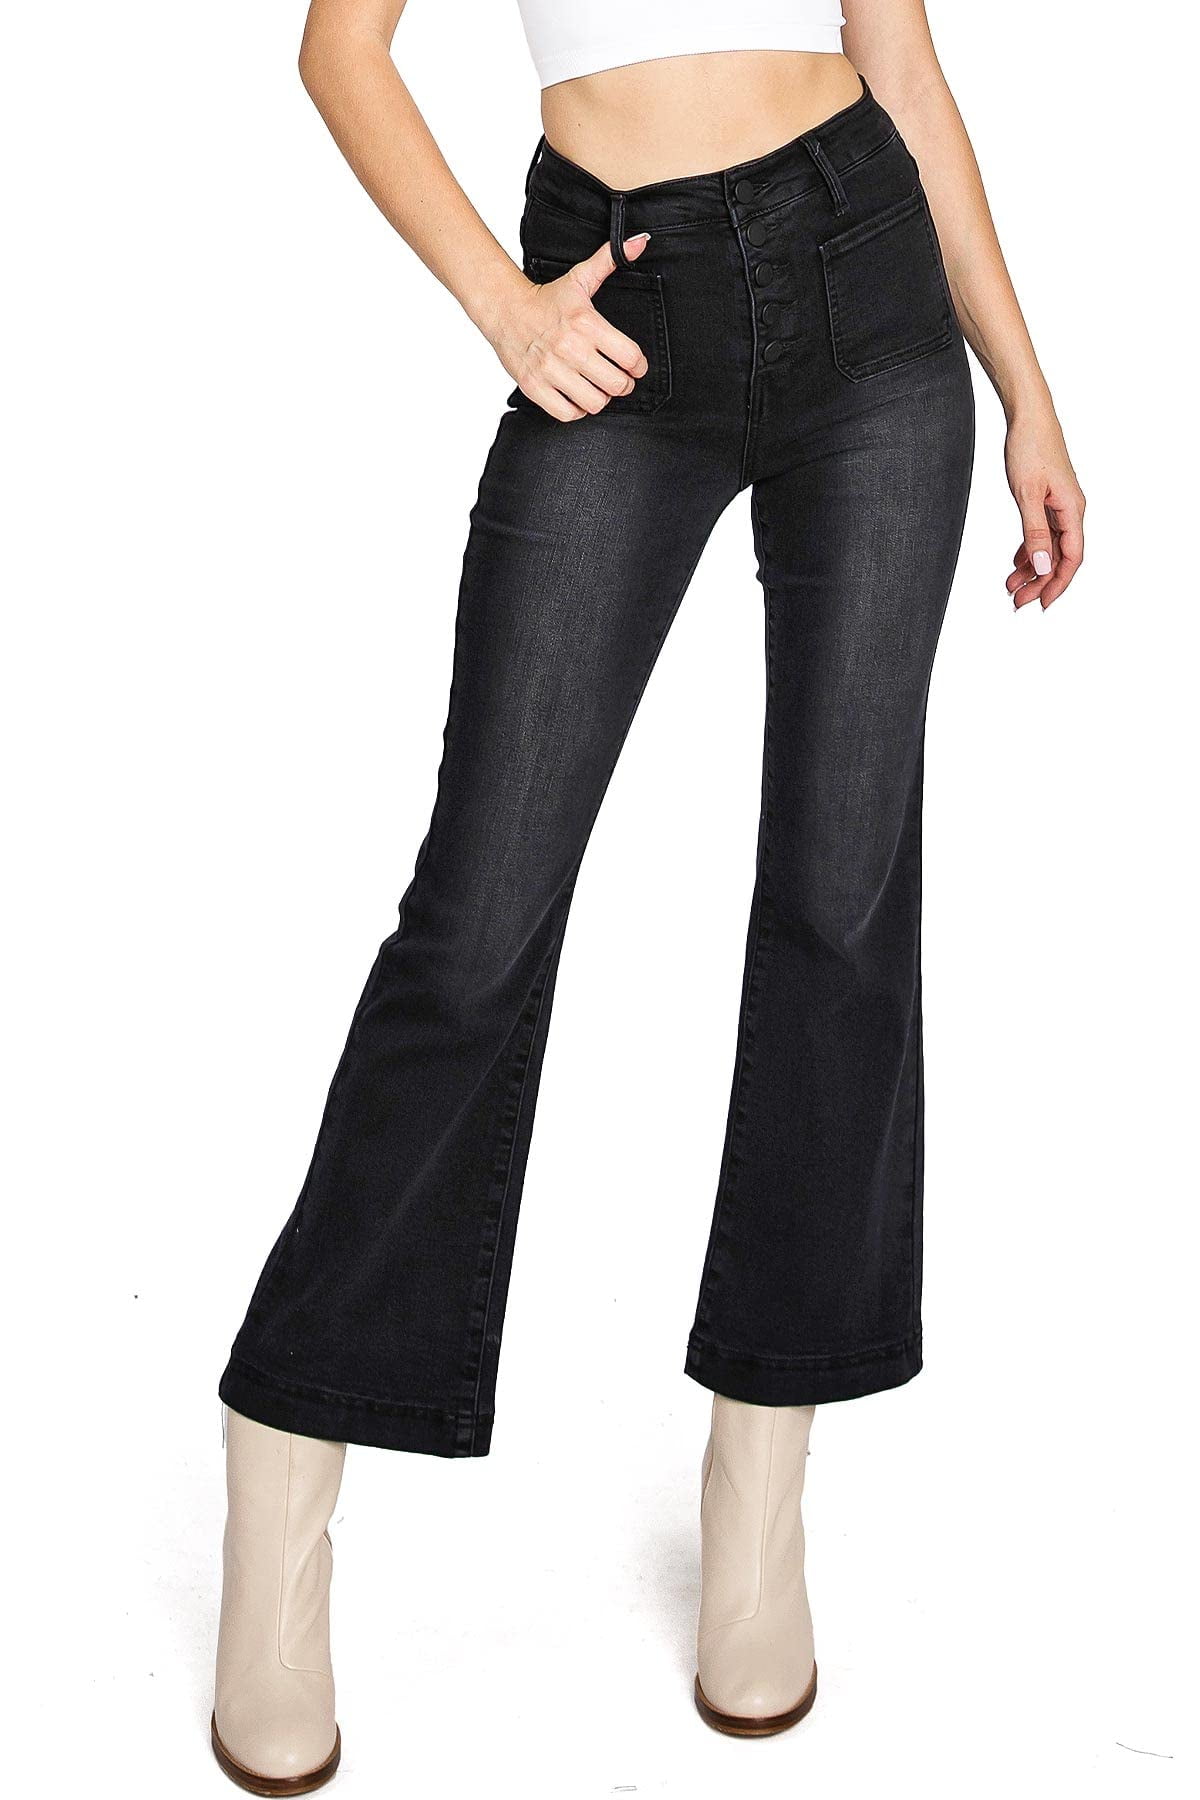 Black Label Women's Juniors High Rise Crop Flare Jeans (Black, 9) 